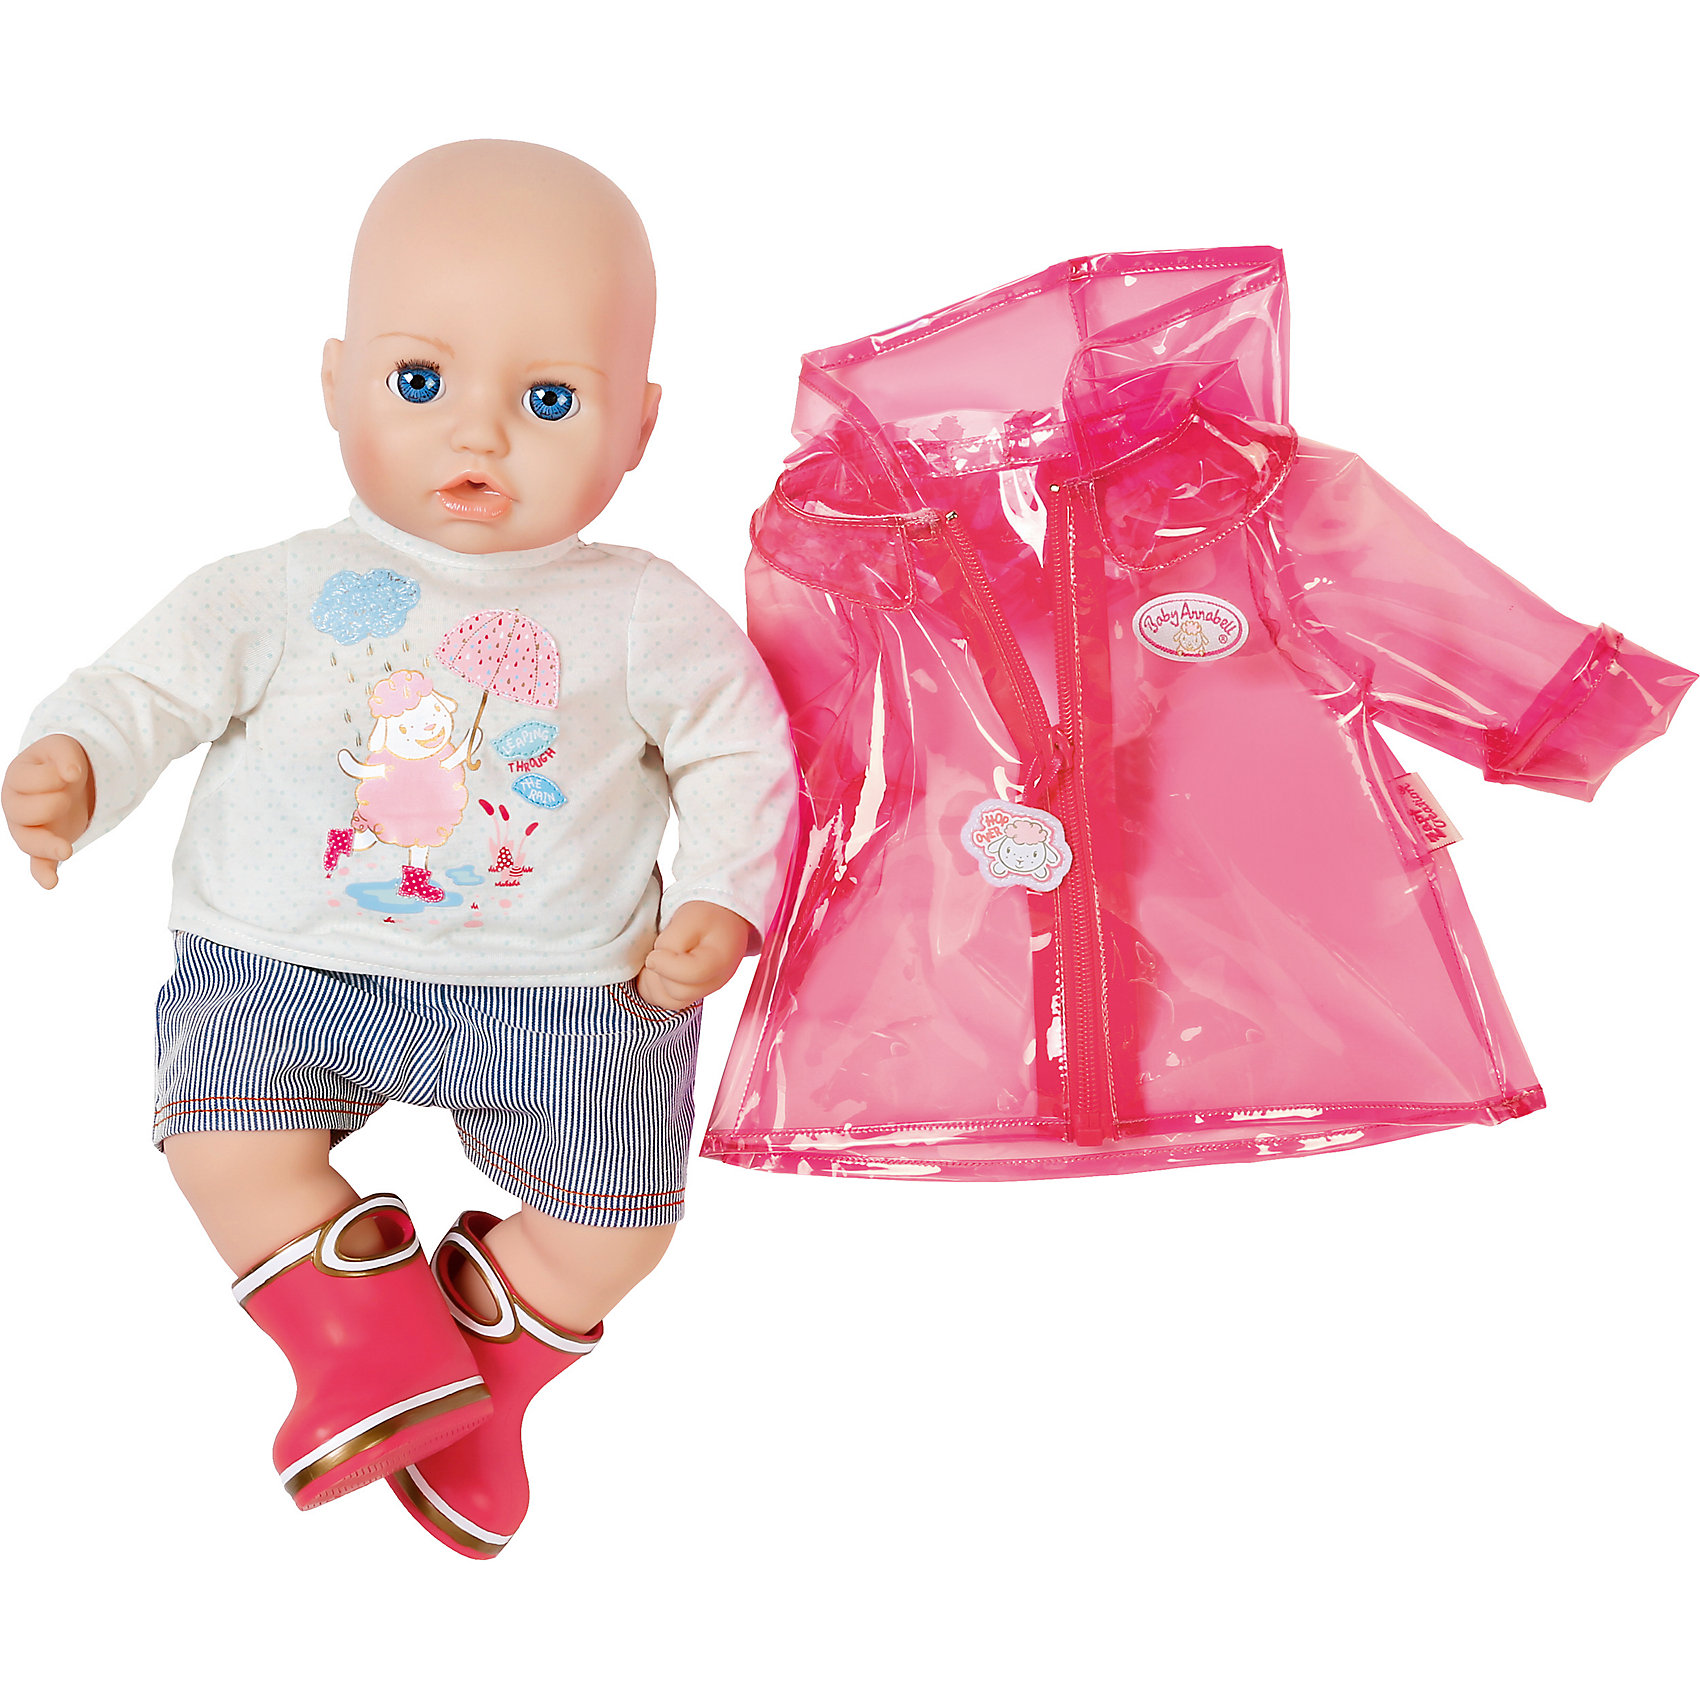 Одежда для беби борн. Беби Борн дождевик. Zapf Creation комплект одежды для дождливой погоды для куклы Baby Annabell 700808. Дождевик Baby Annabell. Zapf Creation одежда для куклы Baby born 824559.